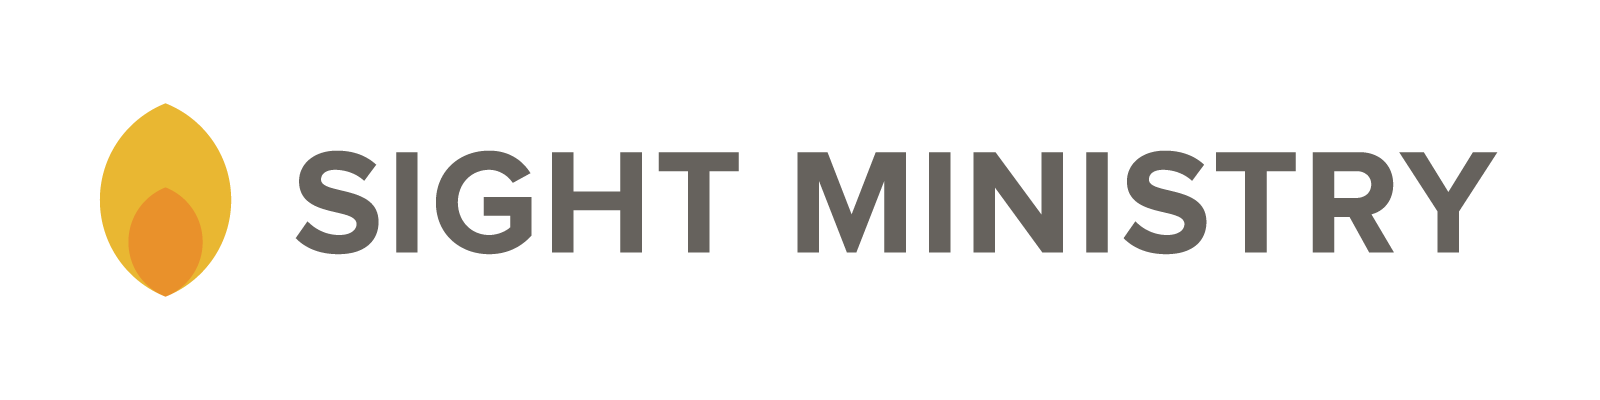 Sight Ministry logo